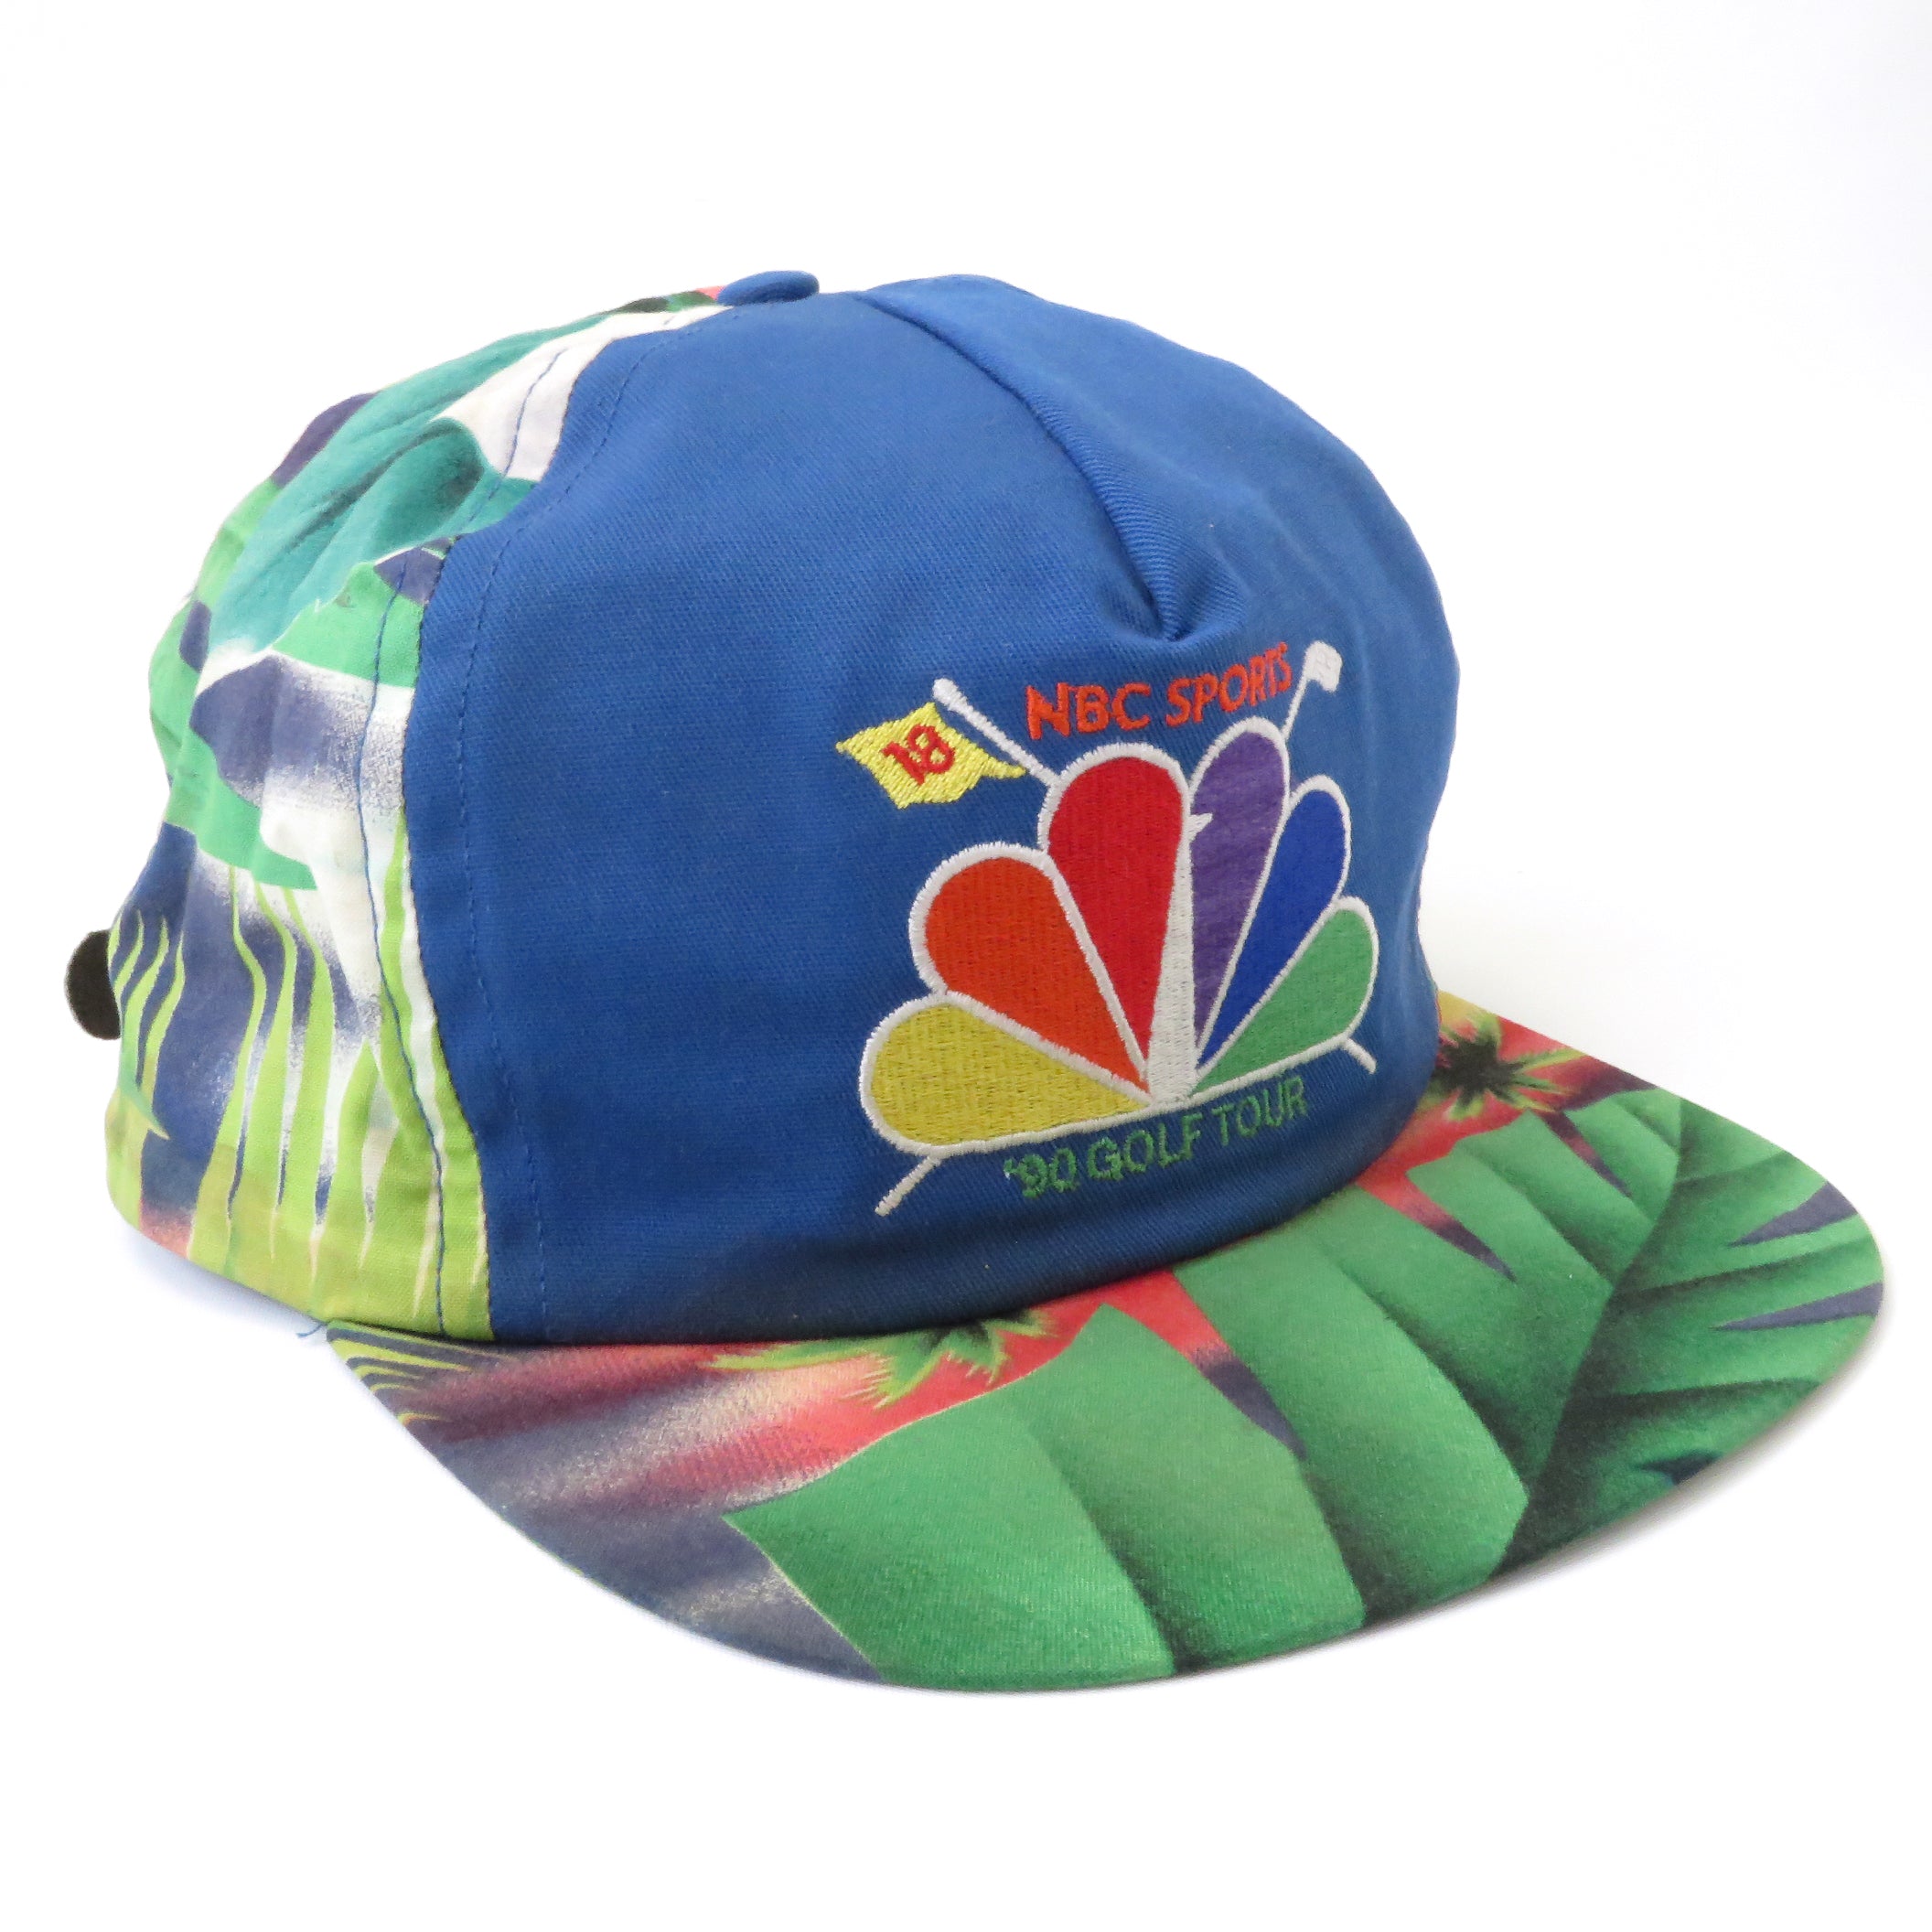 Vintage 1990 NBC Sports Golf Tour Tropical Strapback Hat